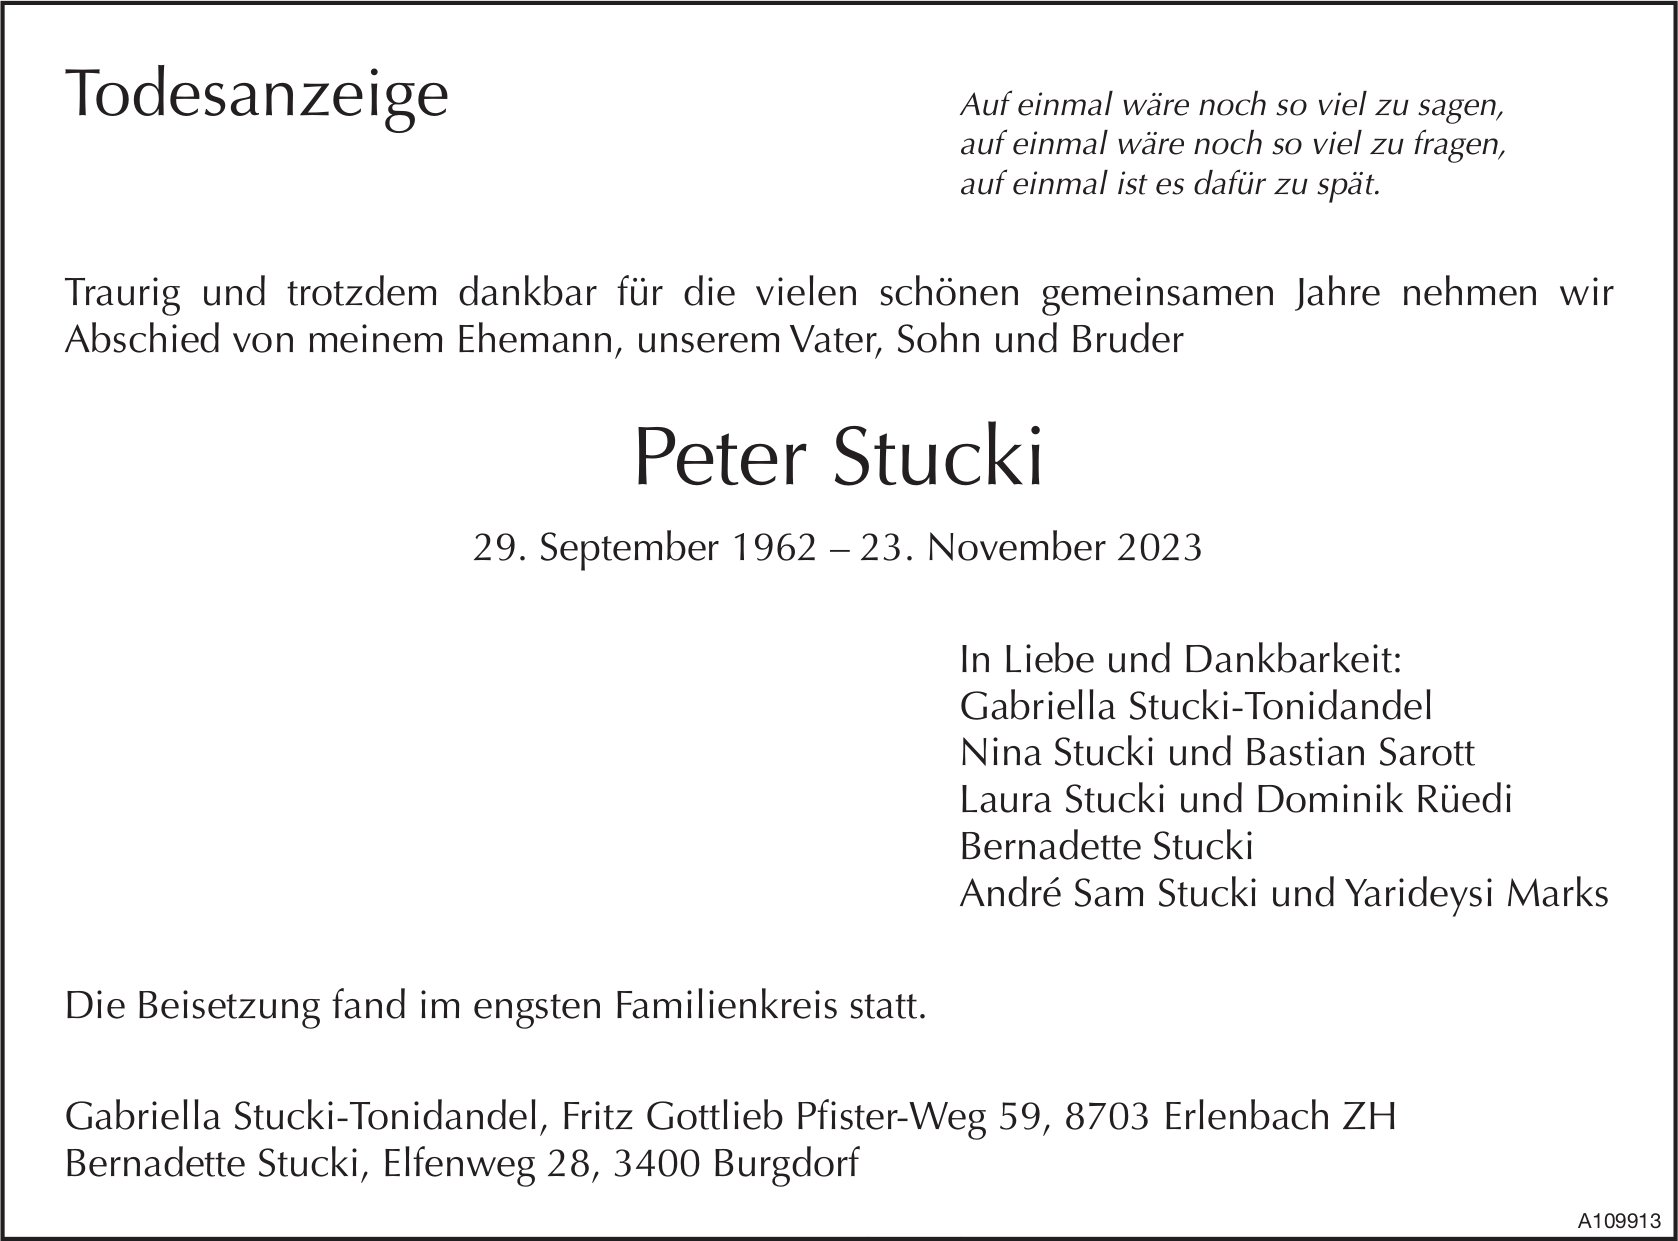 Peter Stucki, November 2023 / TA